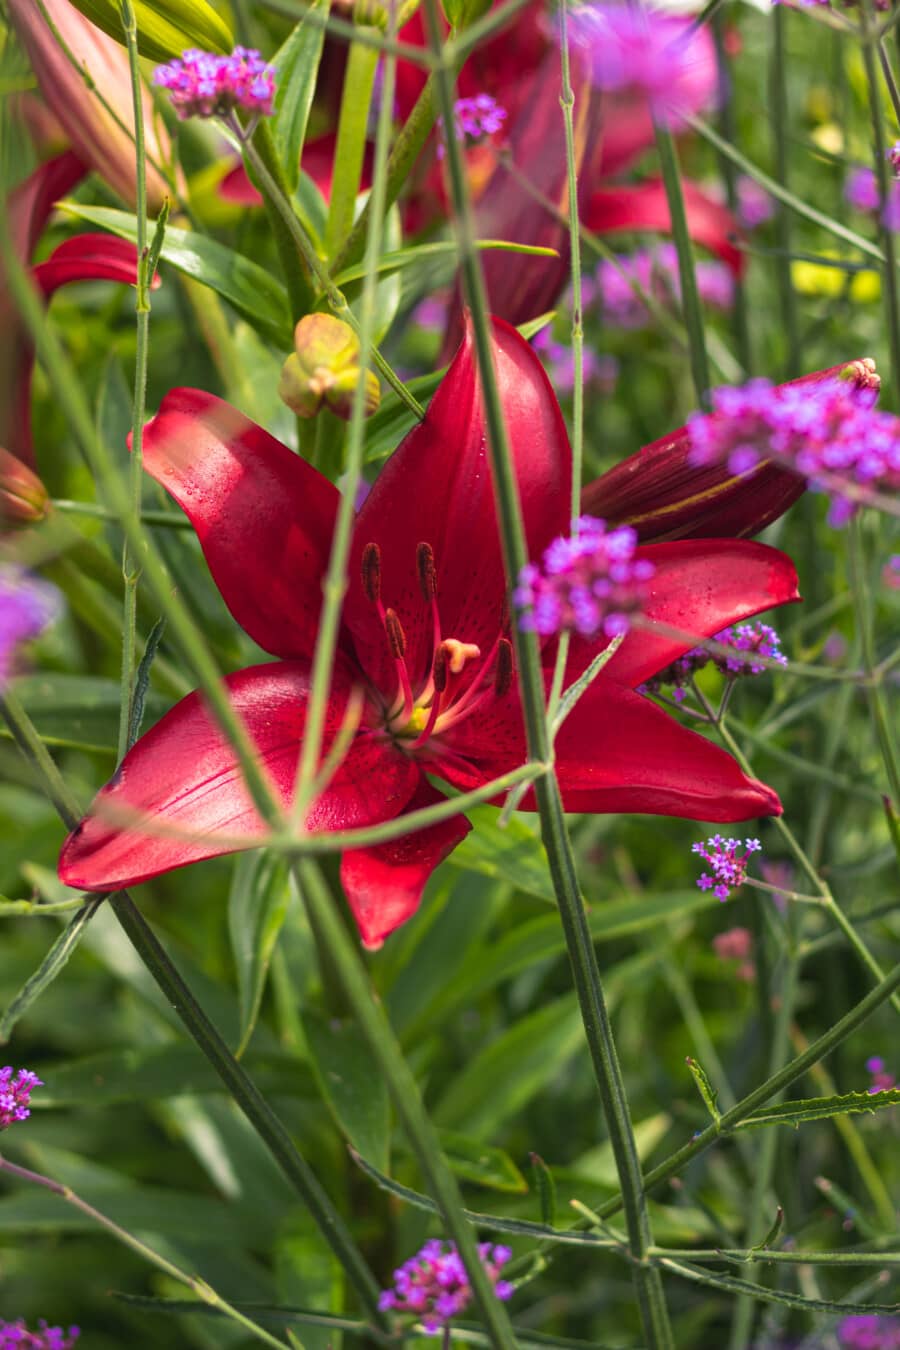 Lilie, Blume, rötlich, Garten, Blatt, Sommer, Flora, Natur, hell, Farbe